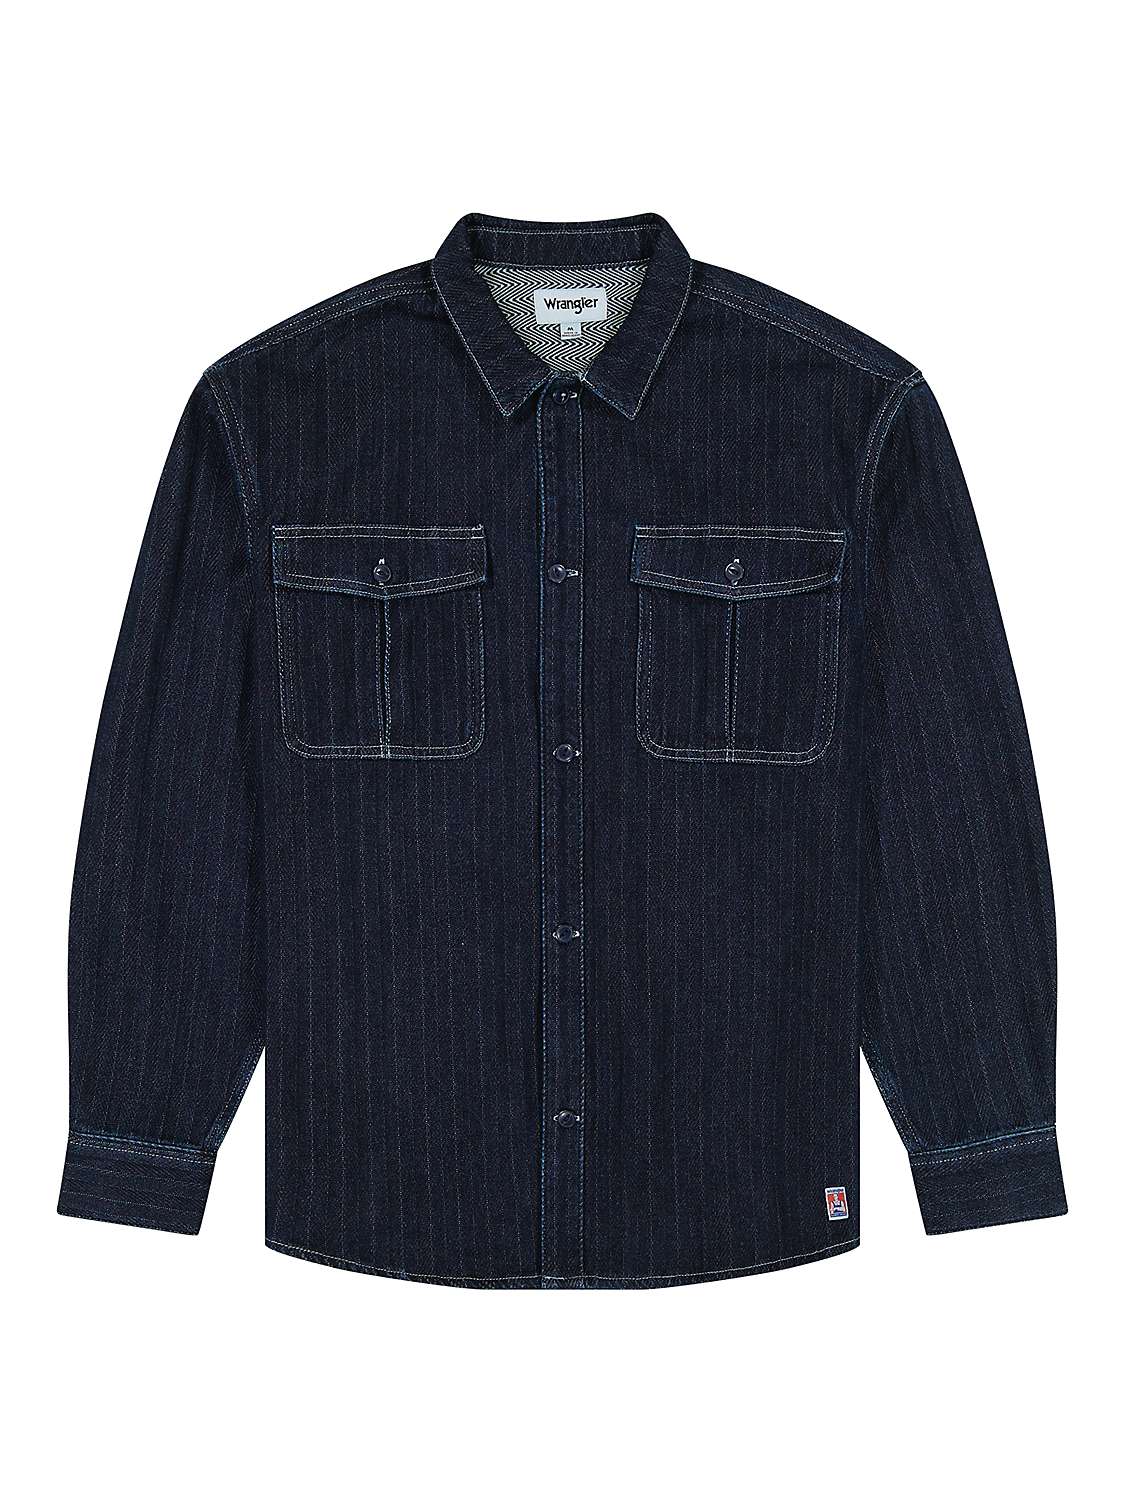 Buy Wrangler Casey Jones Utilty Shirt, Medium Indigo Online at johnlewis.com